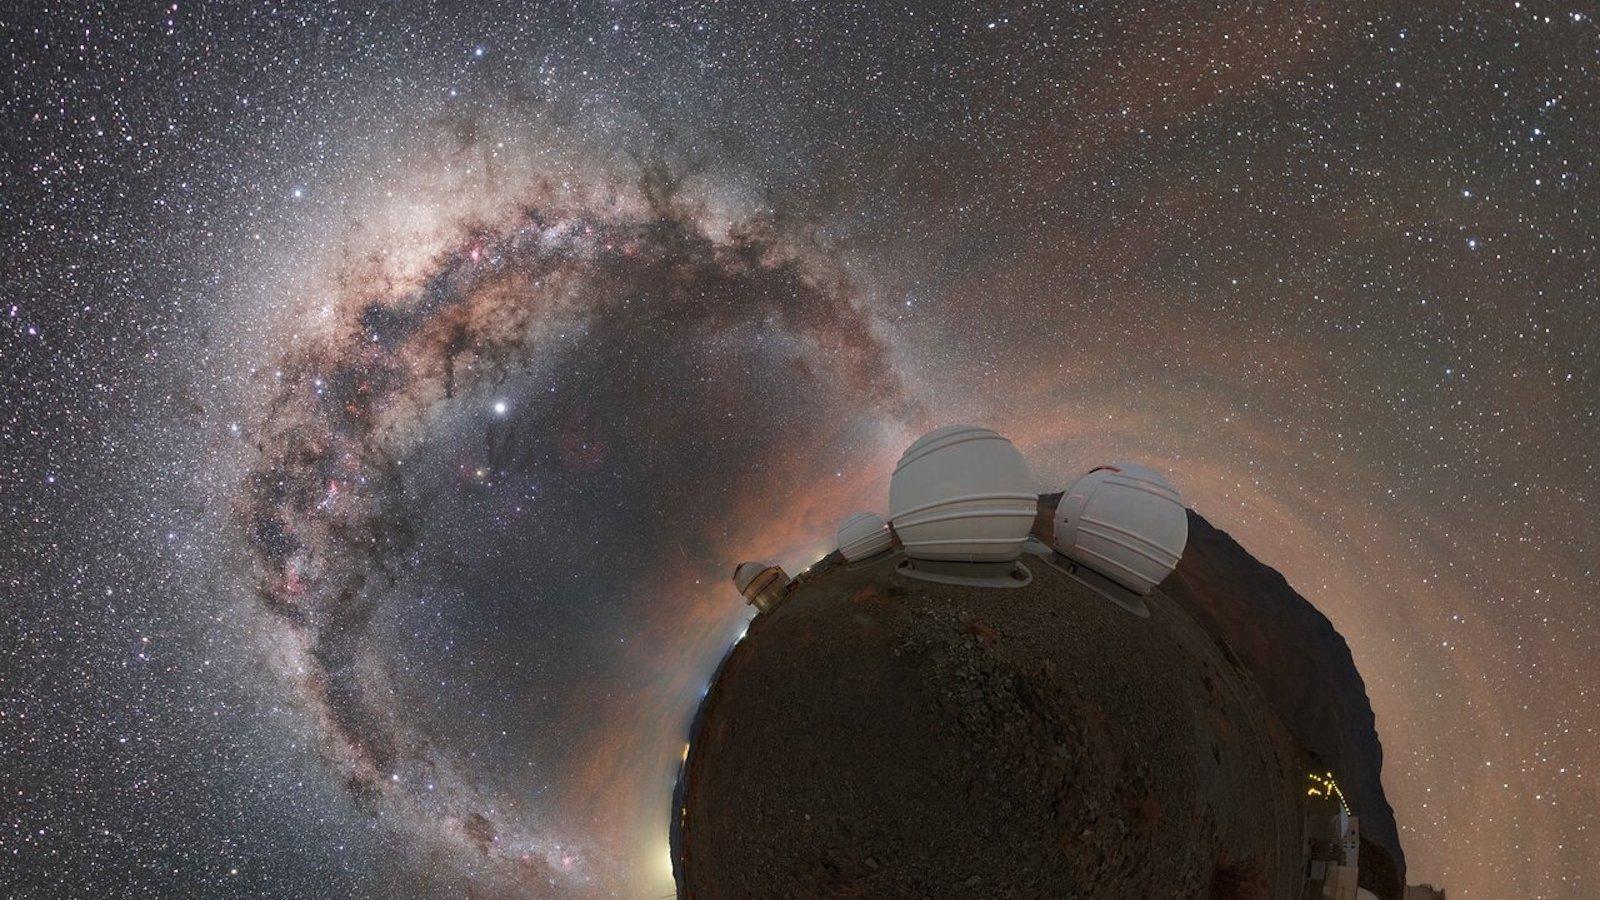 La Silla Observatory and its stunning night sky